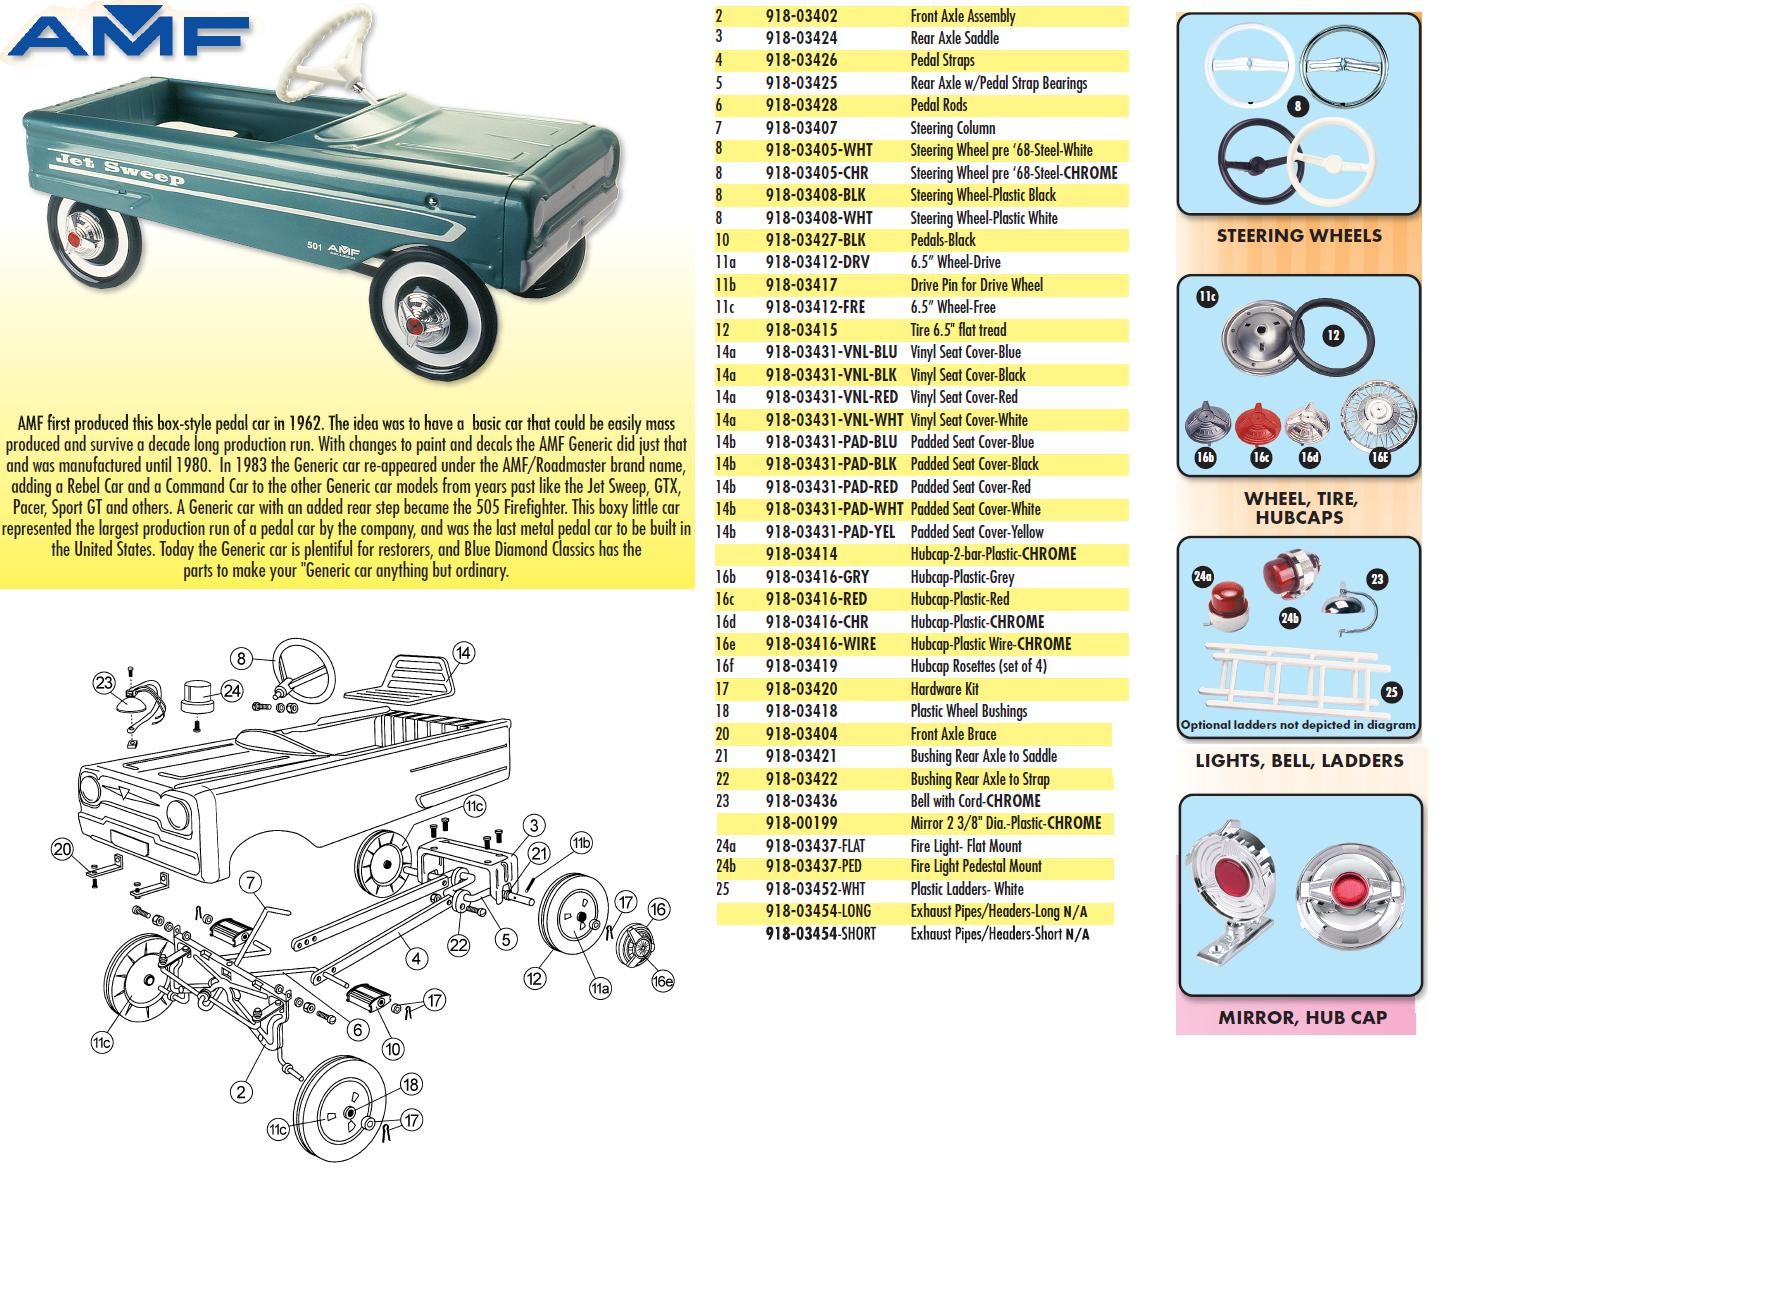 Car Wheel Part Diagram 6 5 Inch Pedal Car Tire Of Car Wheel Part Diagram